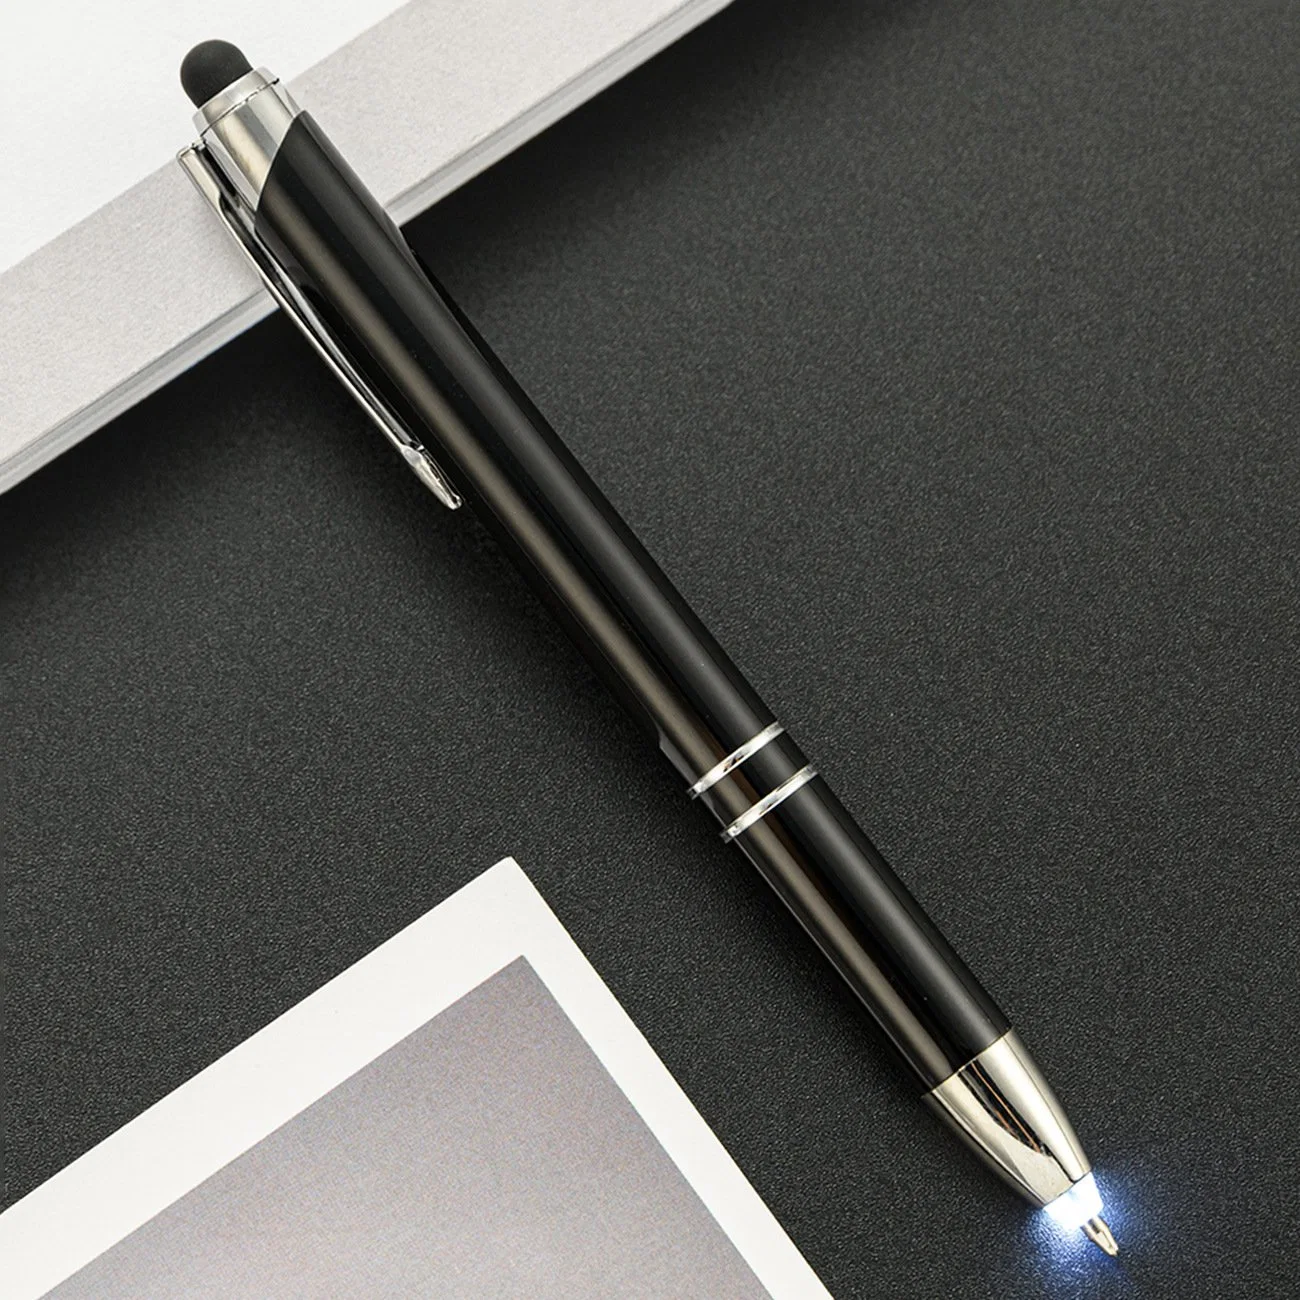 3-in-1 Pen Tip Light up Pen Multi-Function Press LED Lighting Metal Ballpoint Pens for Read and Write in The Dark